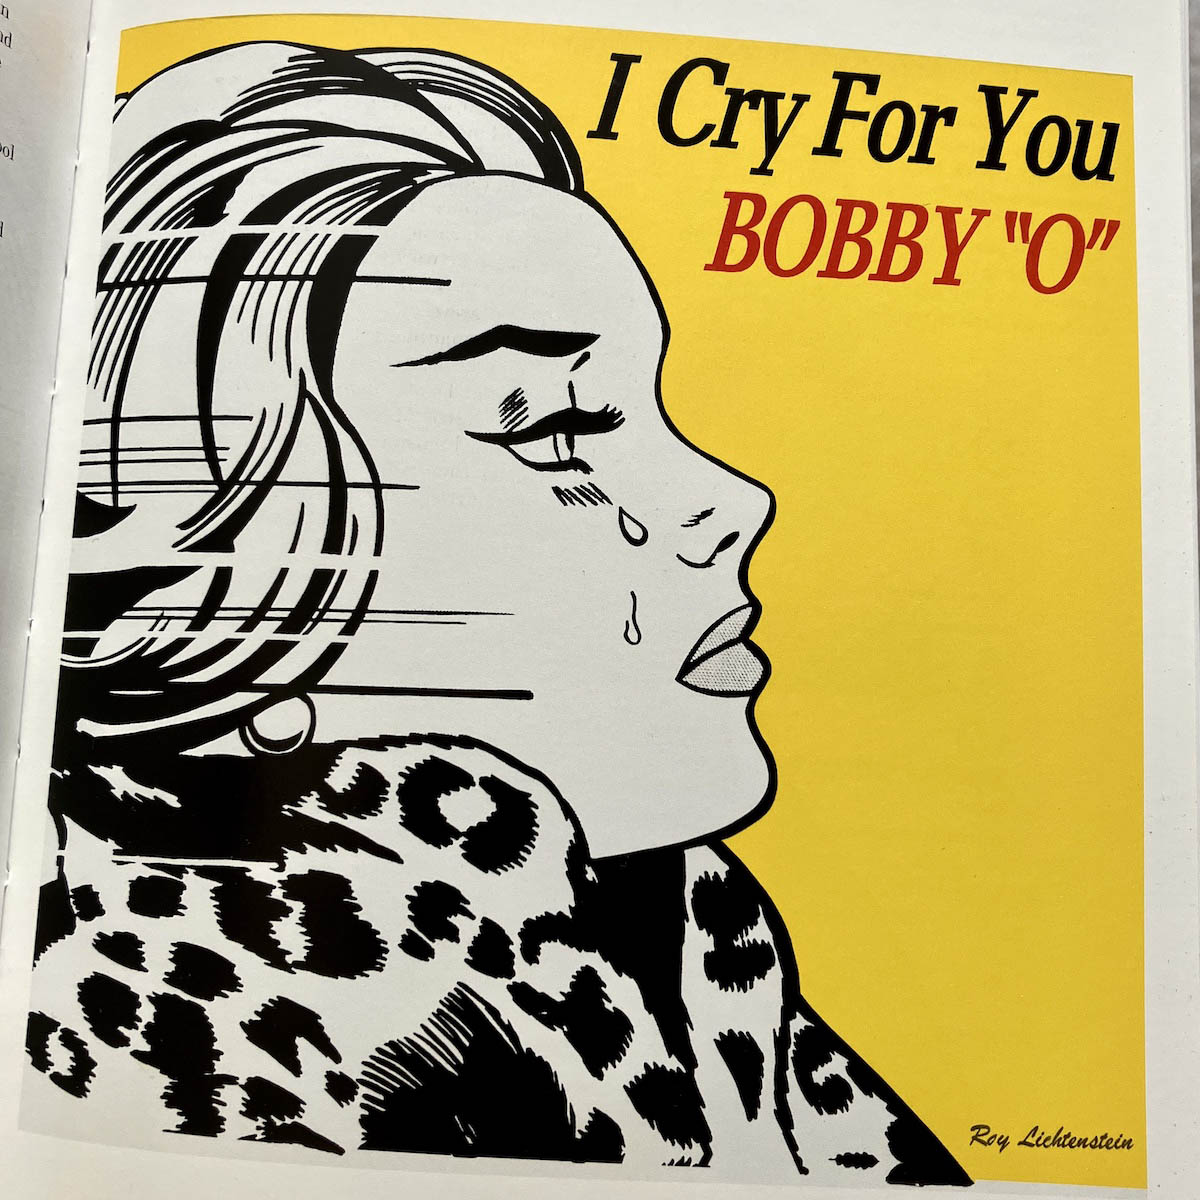 Roy Lichtenstein pop art album cover for Bobby "O" | Photo By Kerwin